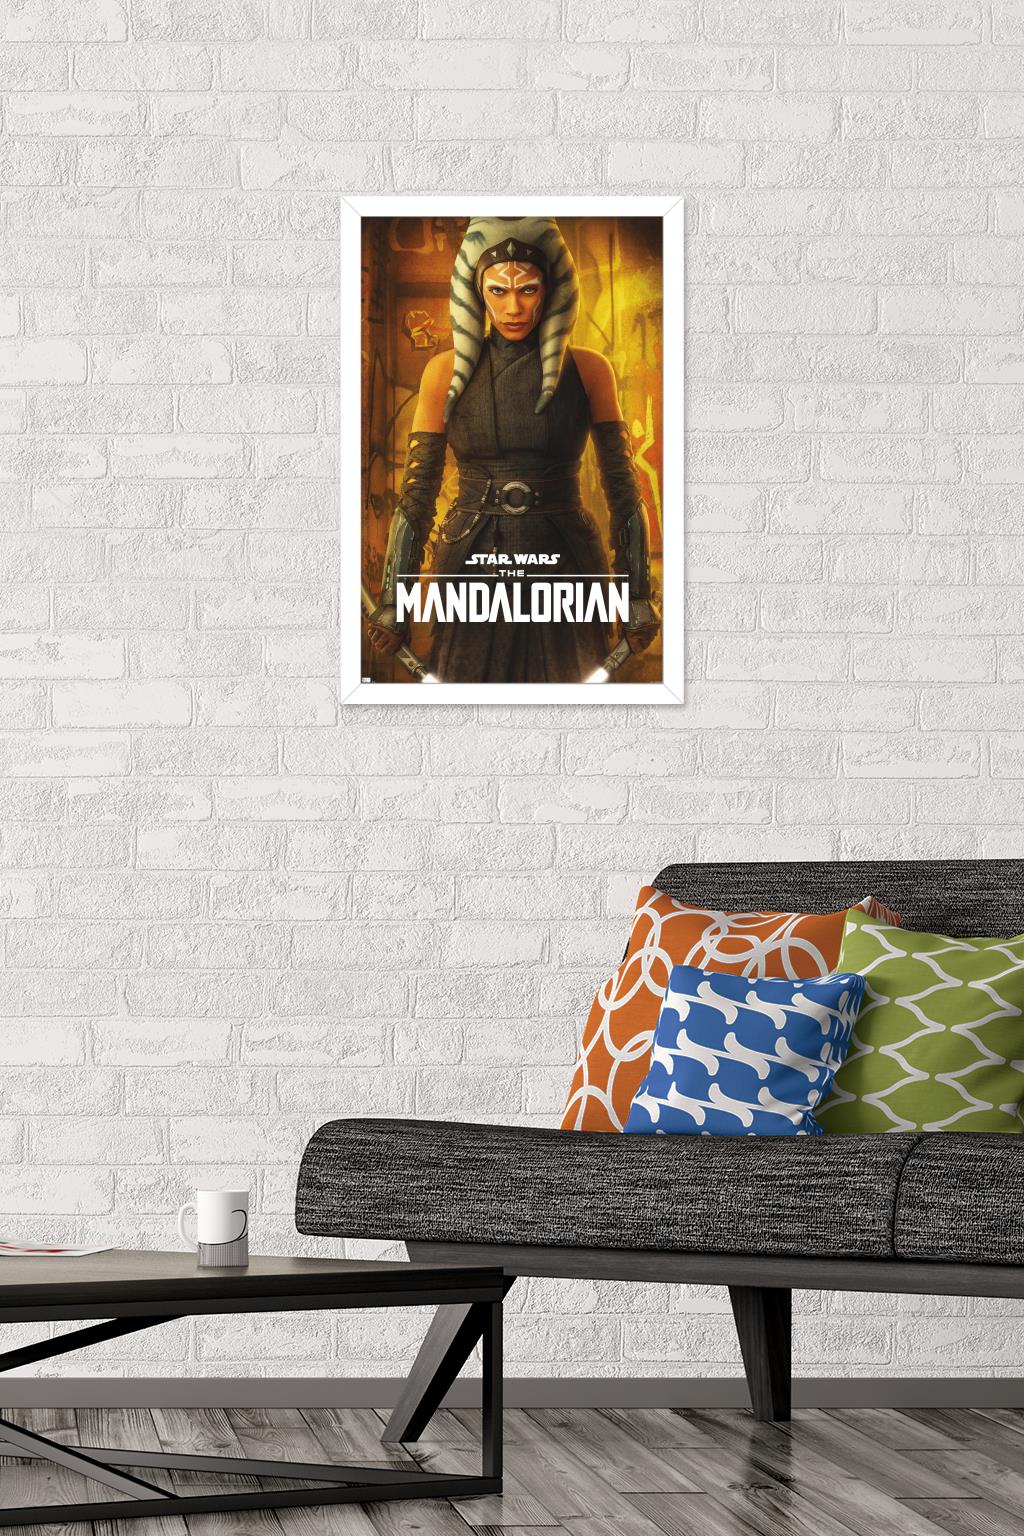 Star Wars: The Mandalorian Season 2 - Ahsoka One Sheet Wall Poster, 14.725" x 22.375", Framed - image 2 of 5